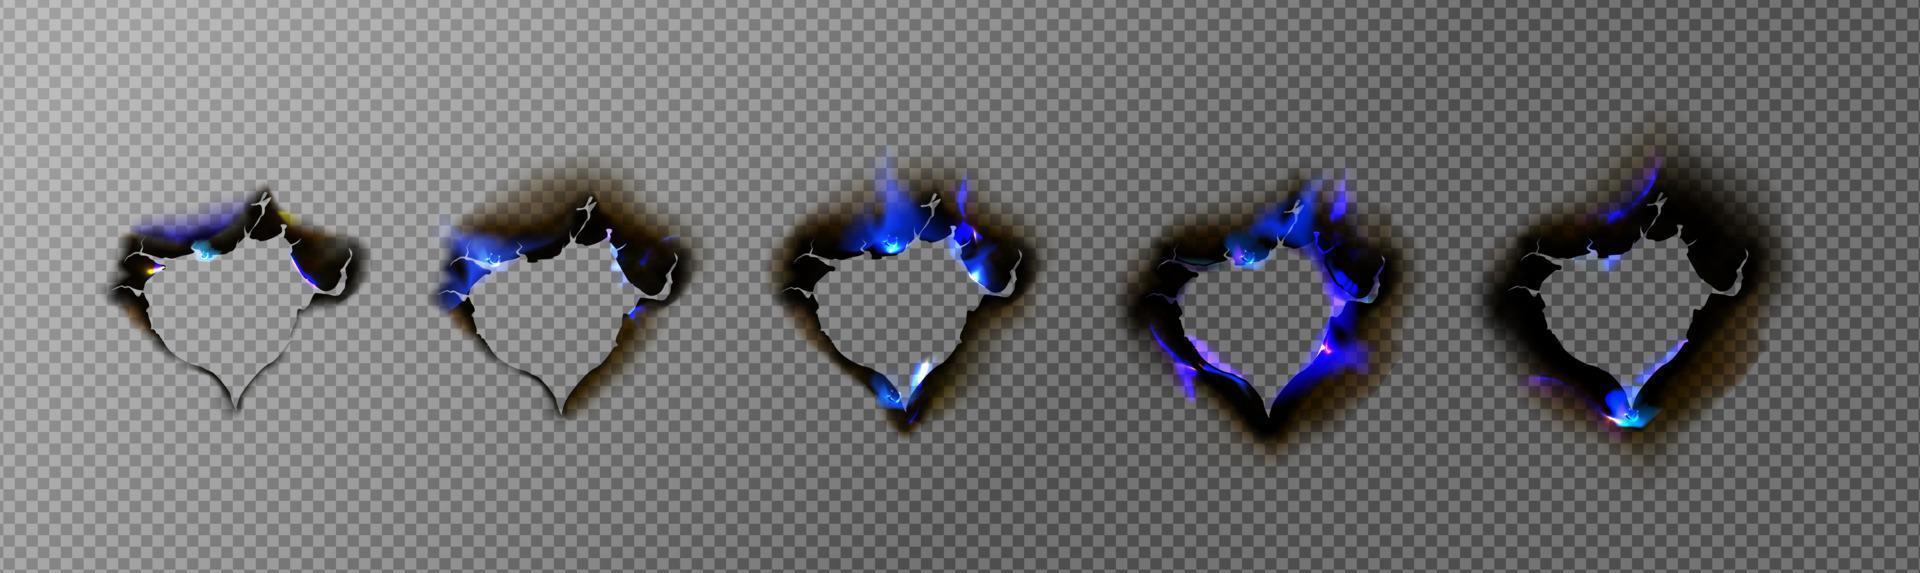 Burn paper holes with blue fire, burnt frames set vector